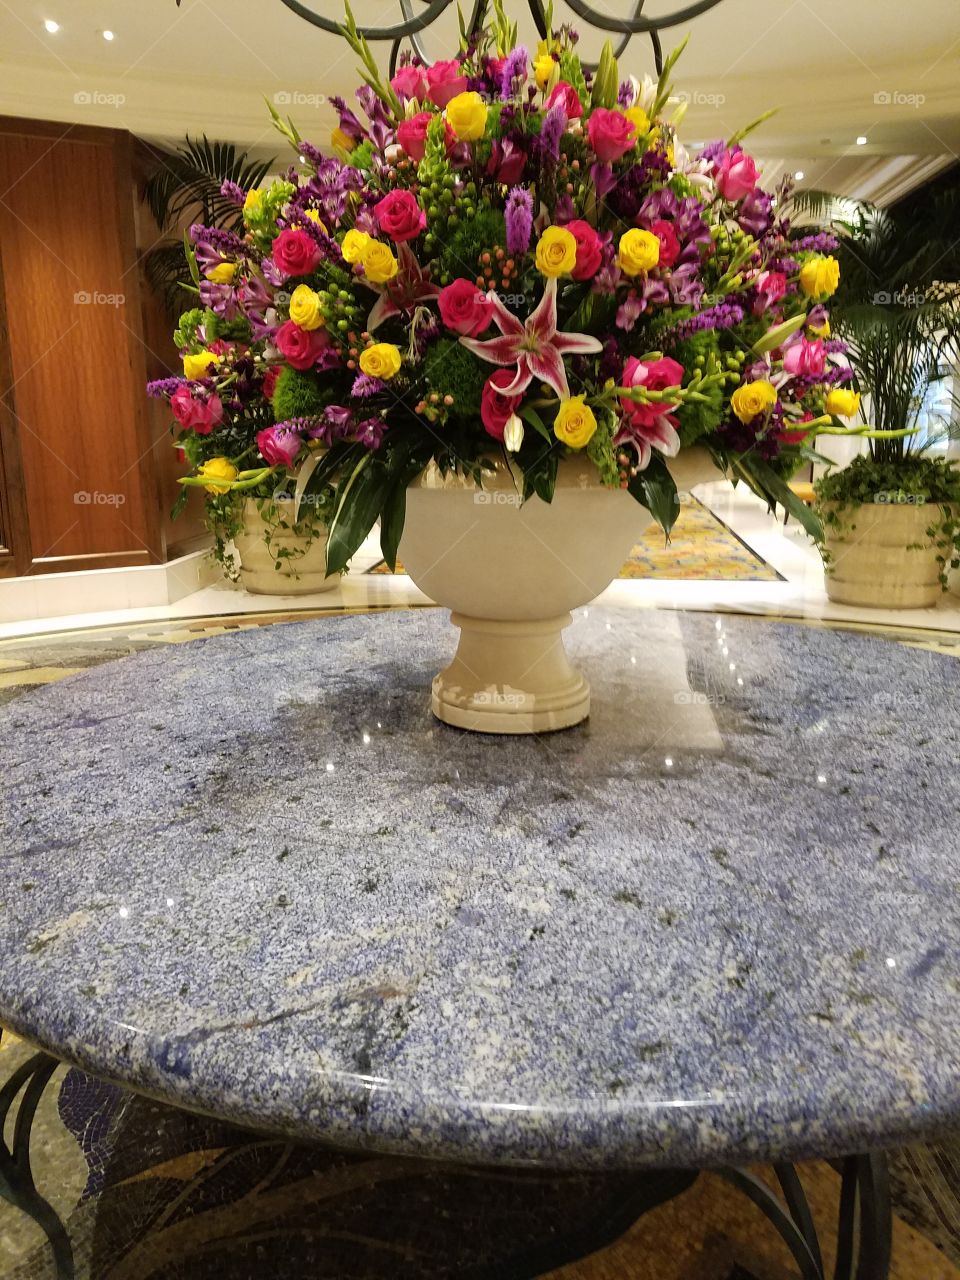 flower arrangement,large, colorful  table setting